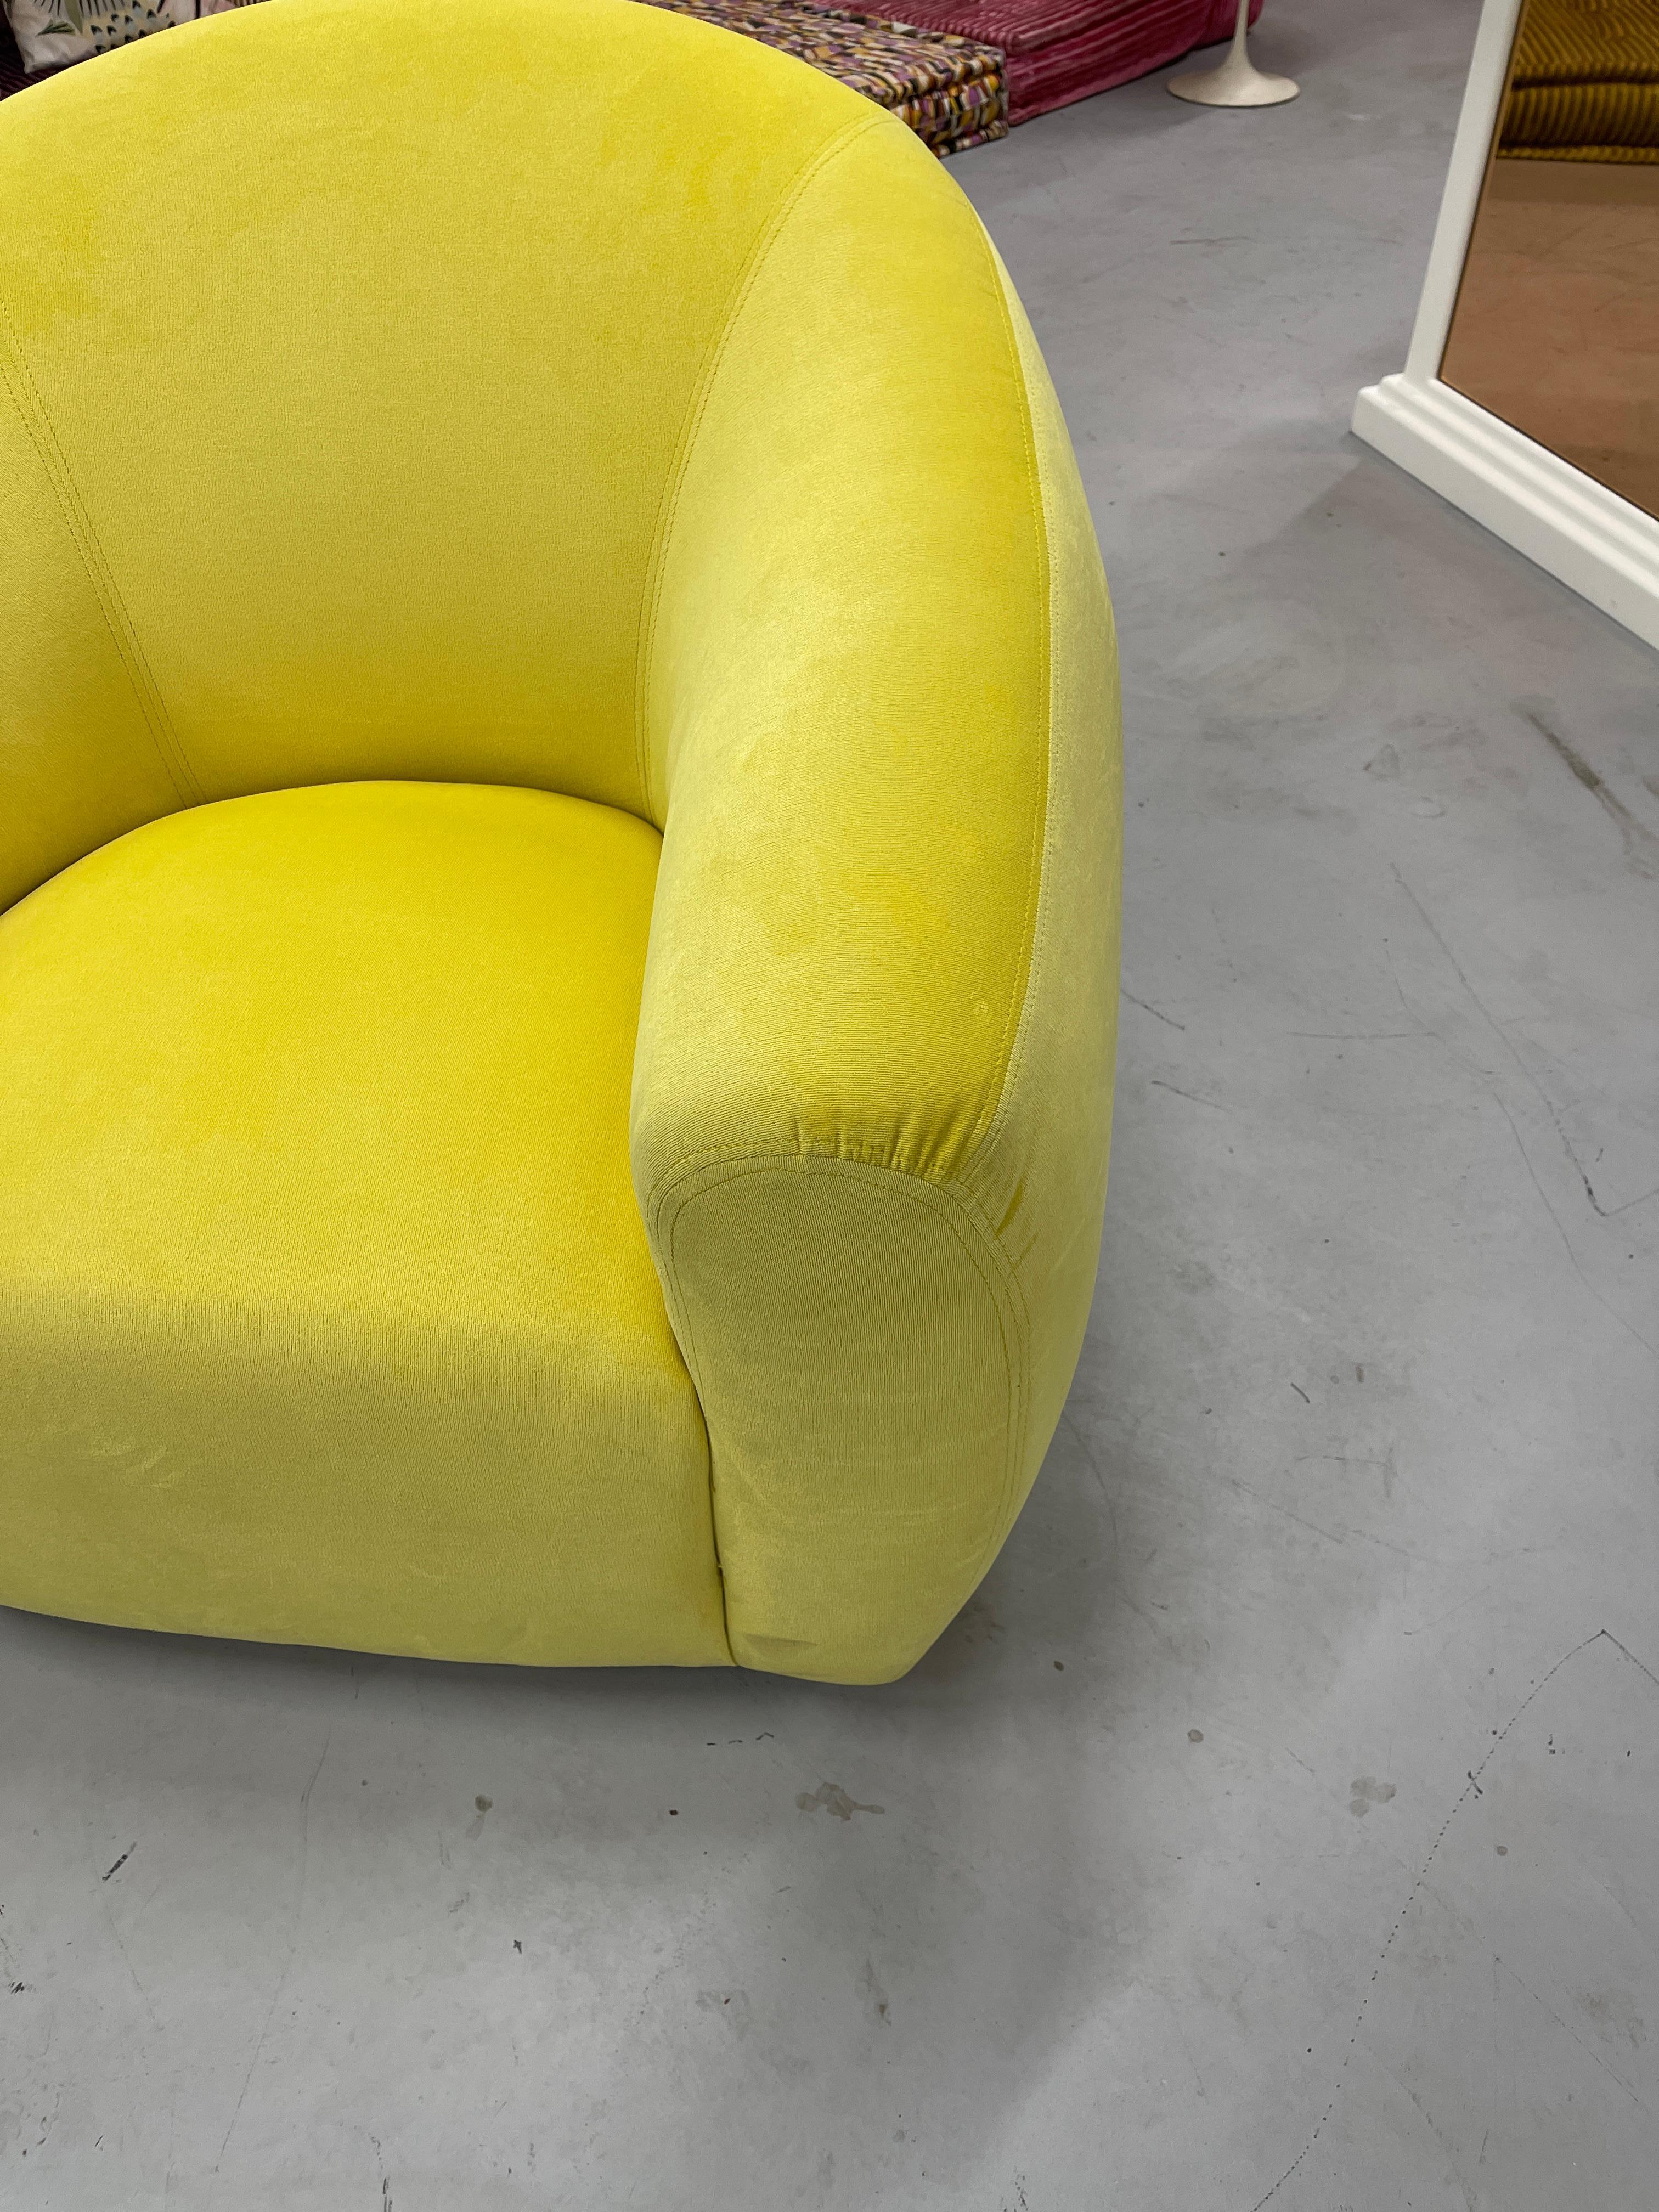 Upholstery A Rudin Swivel Chairs in Limon Kravet Fabric